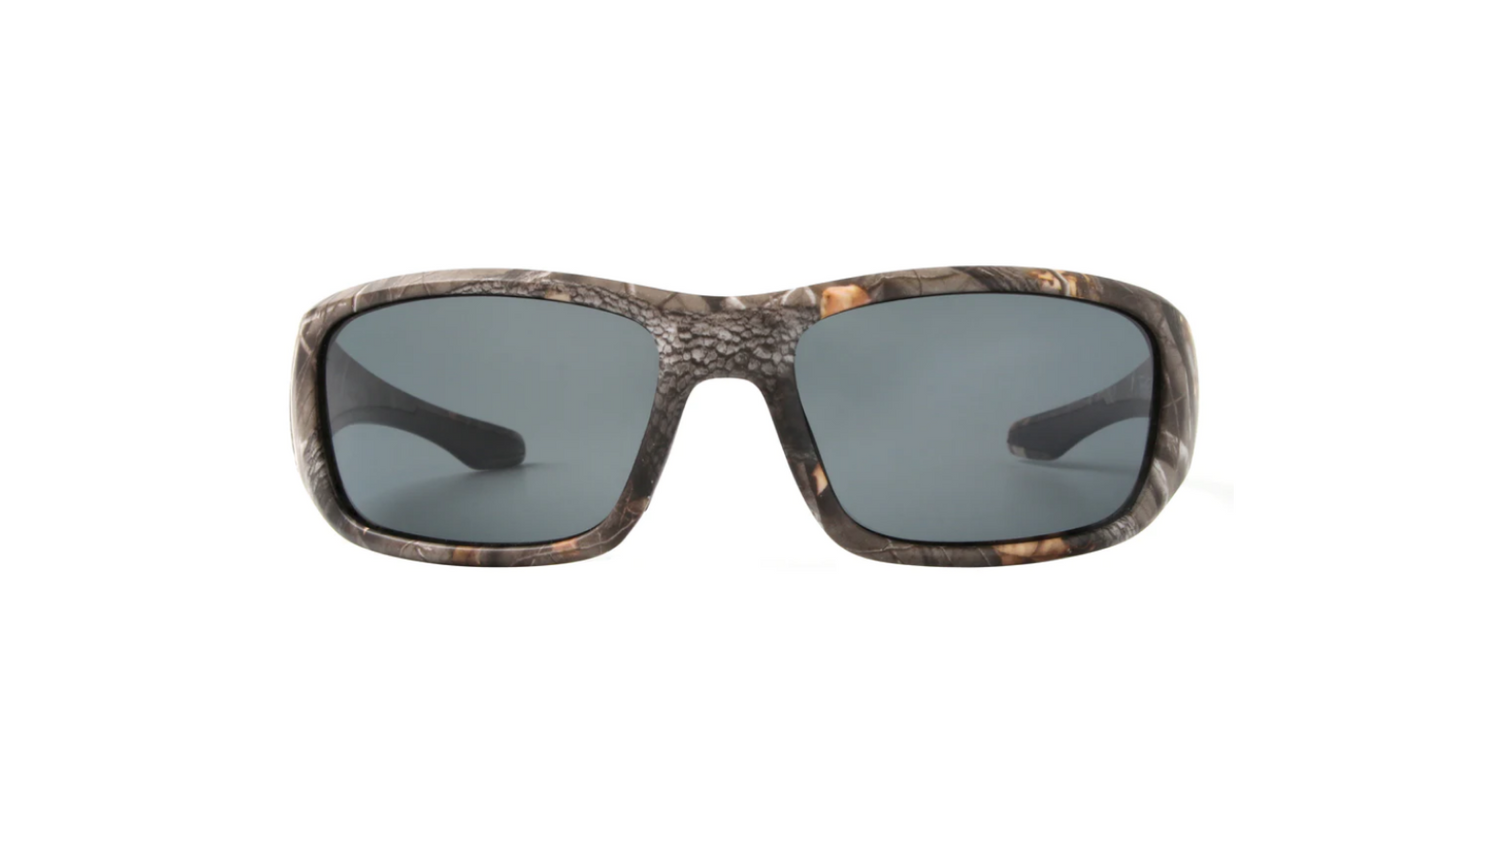 Fishoholic Polarized Fishing Sunglasses w Free Hard Case & Pouch UV400 100%  UV Protection. Best Gift to Fish River Lake Bass Saltwater & Flyfishing (R)  Trademark (Gloss Black, Blue Mirror) : 